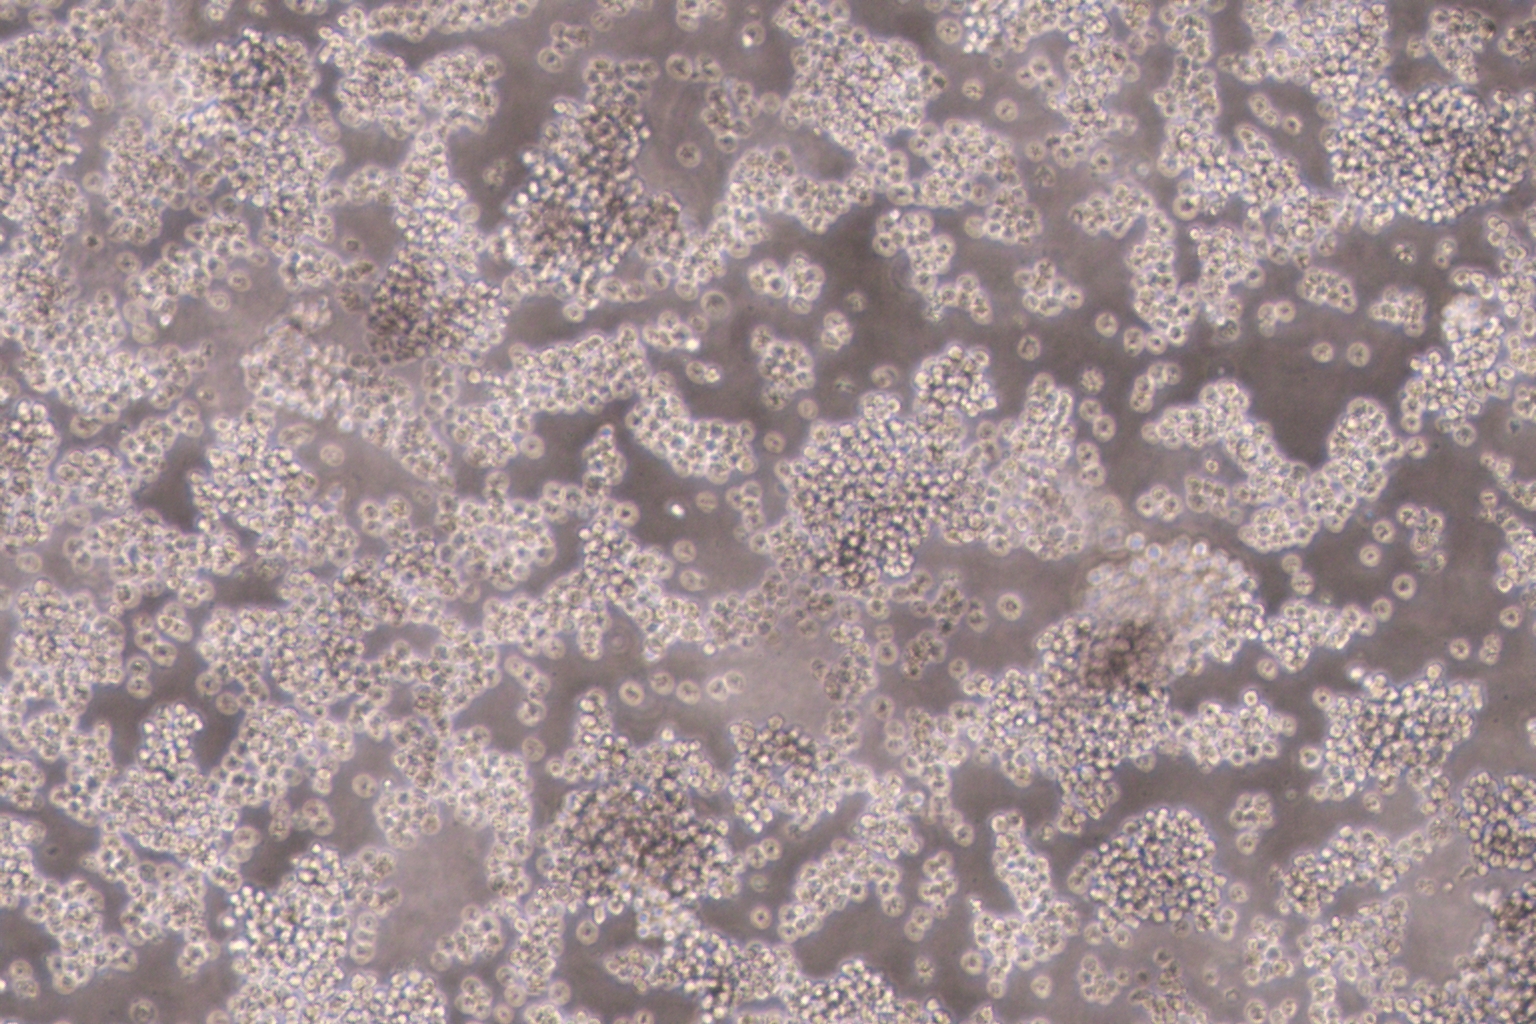 NB4人急性早幼粒细胞白血病细胞